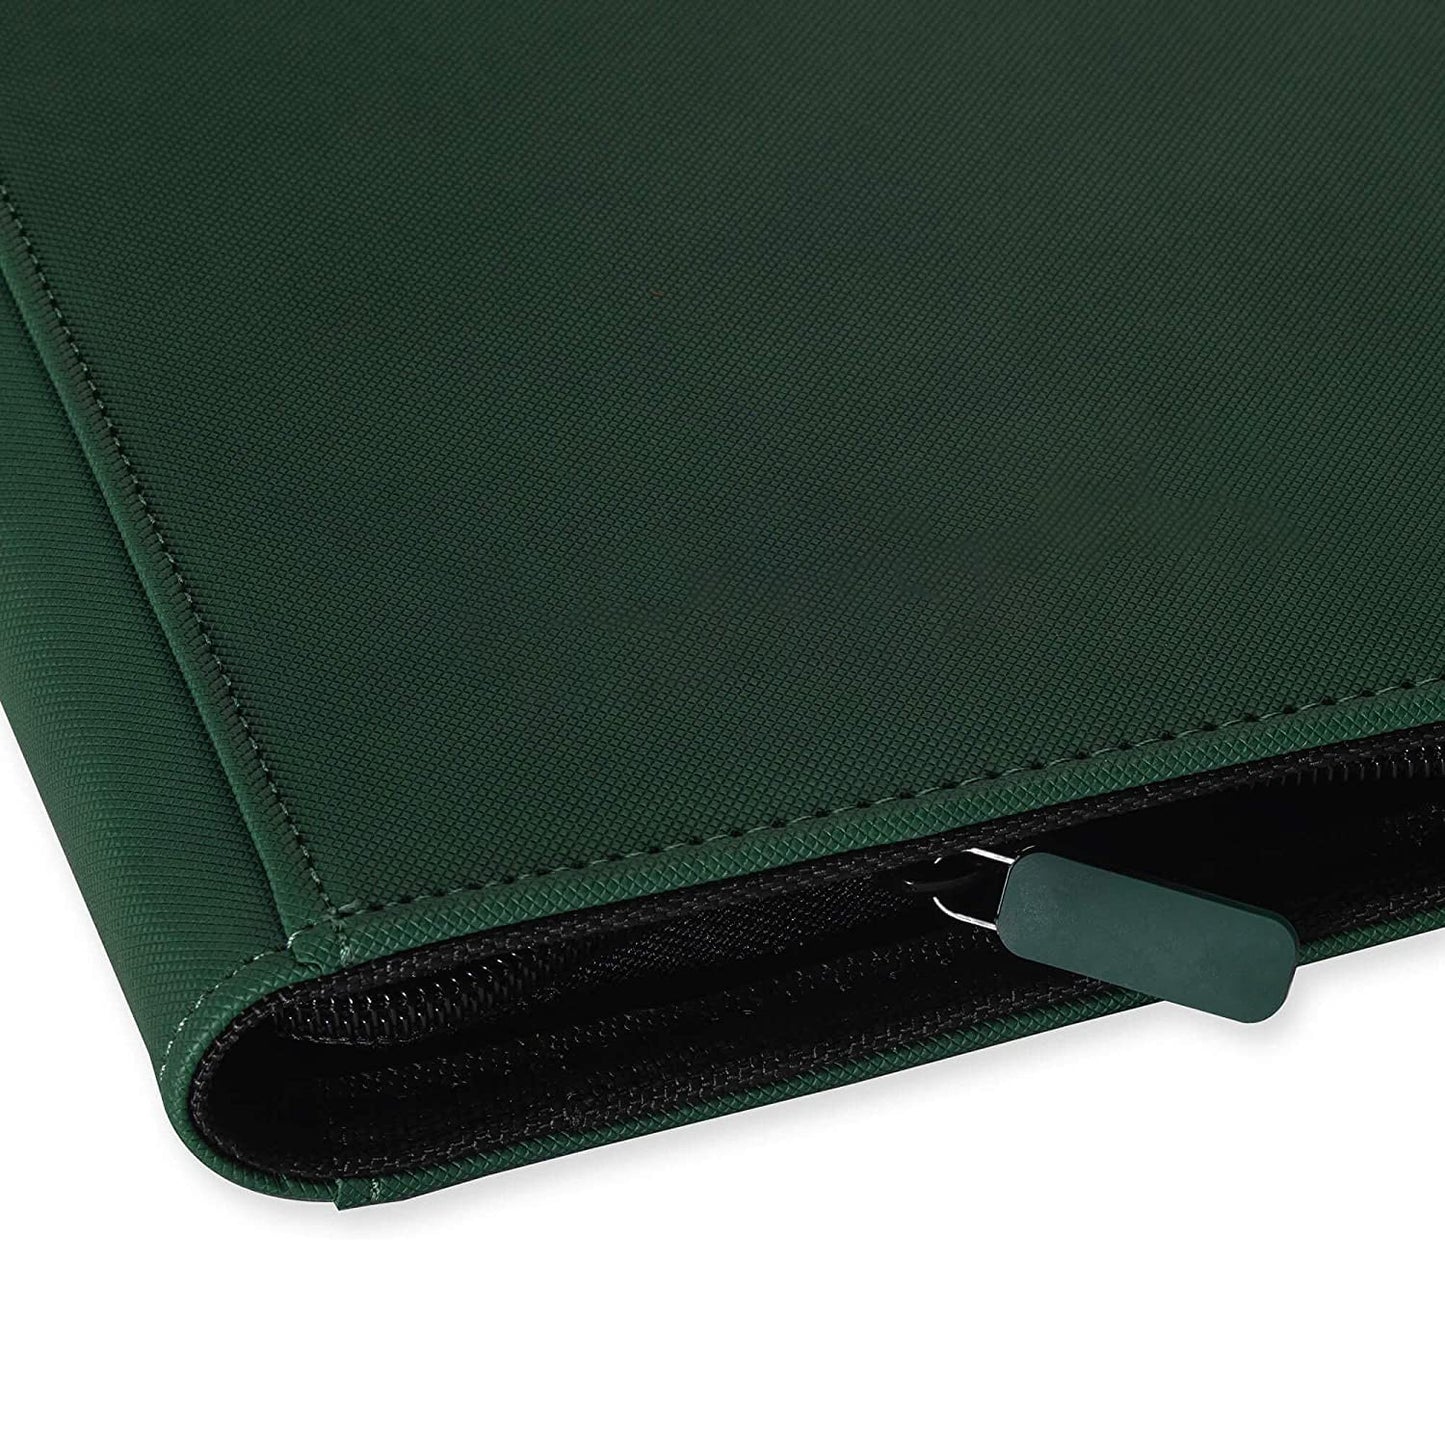 Premium Zip Binder 9 Pocket Trading Card Album Folder - Green